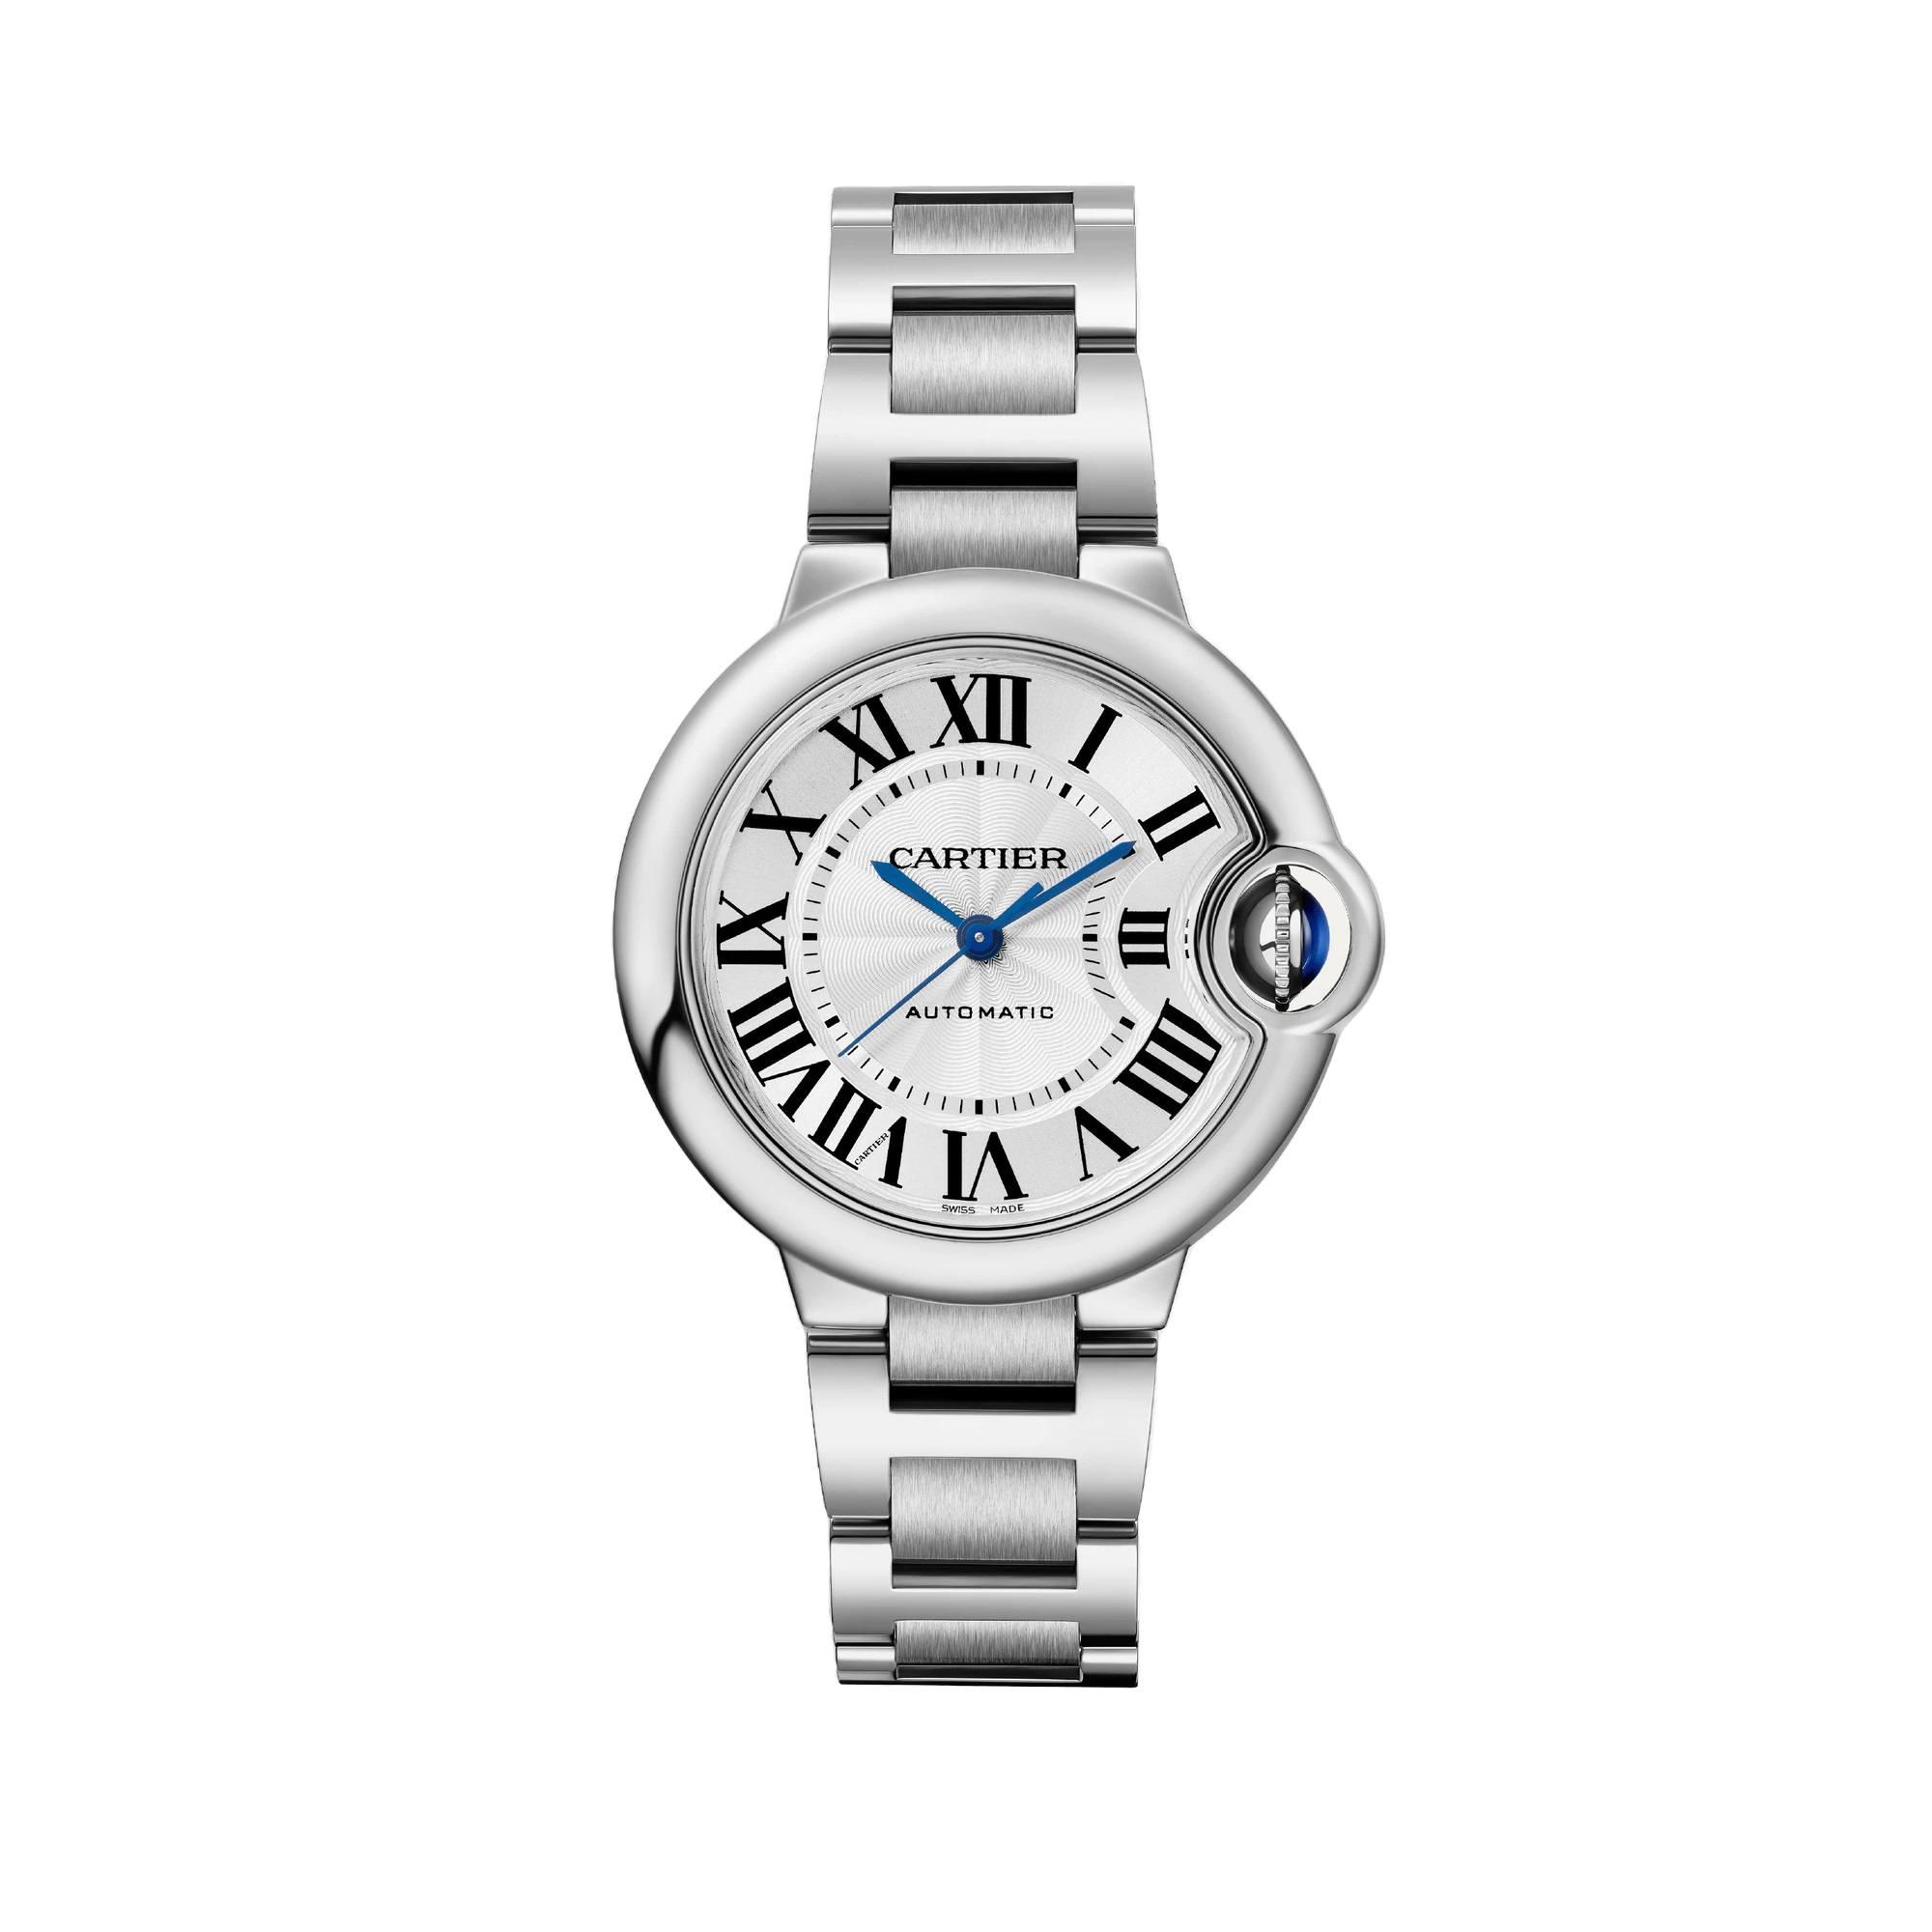 Ballon Bleu de Cartier Watch, Silver Guilloche Dial, 33mm
